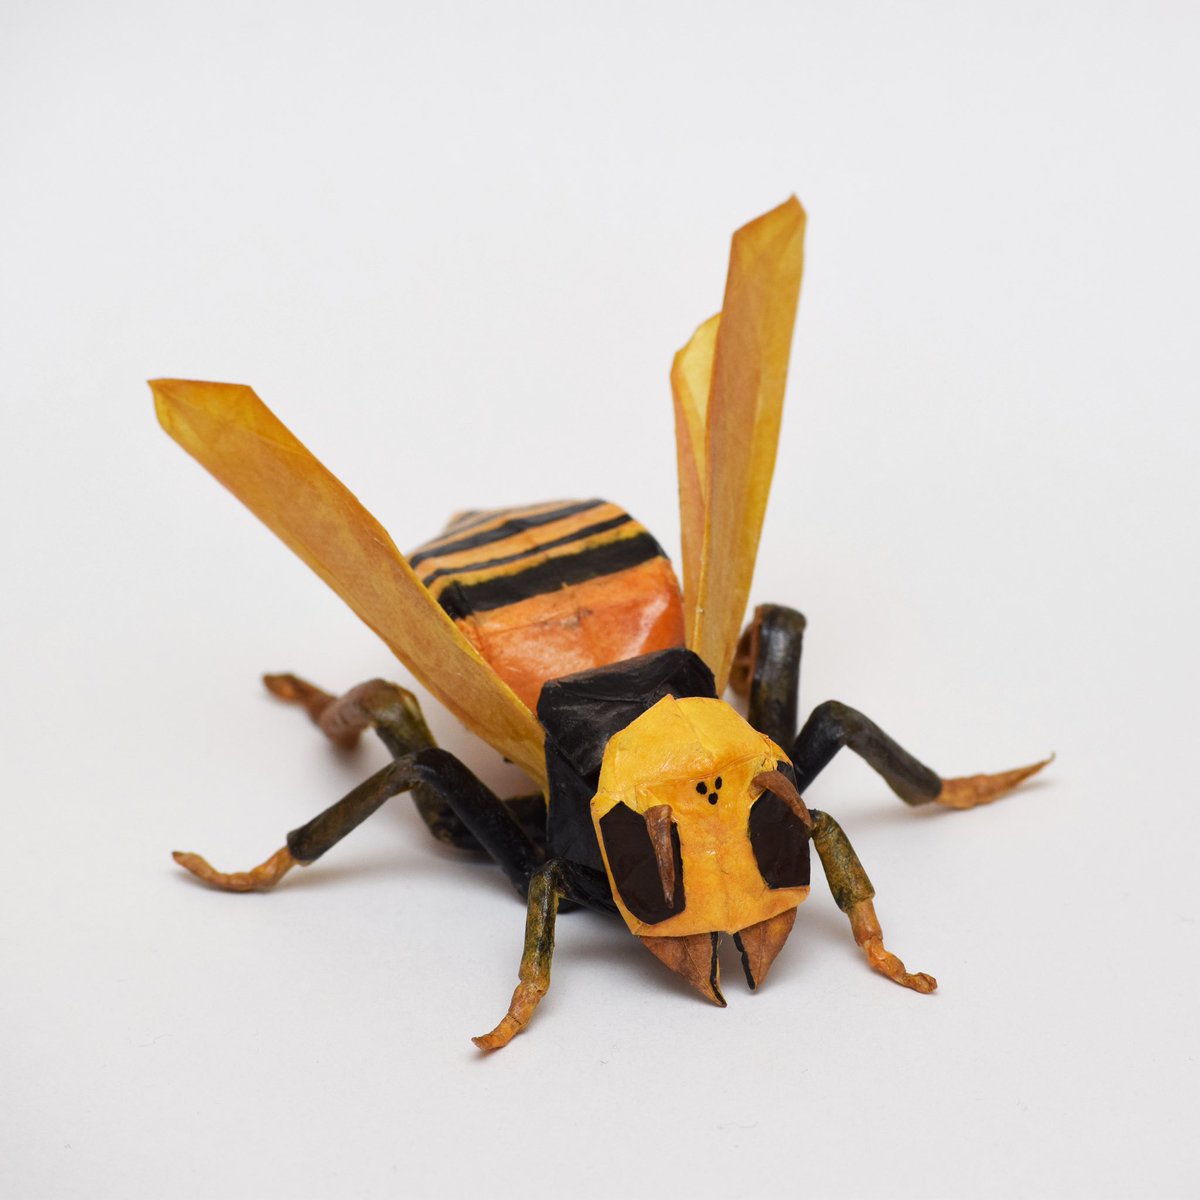 Kal スズメバチ Wasp 不切正方形一枚折り 折り上げた後に塗装とコーティングをしています 翅に蝋引き加工を施してみました 初めての昆虫創作 折り紙 折り紙作品 Origami